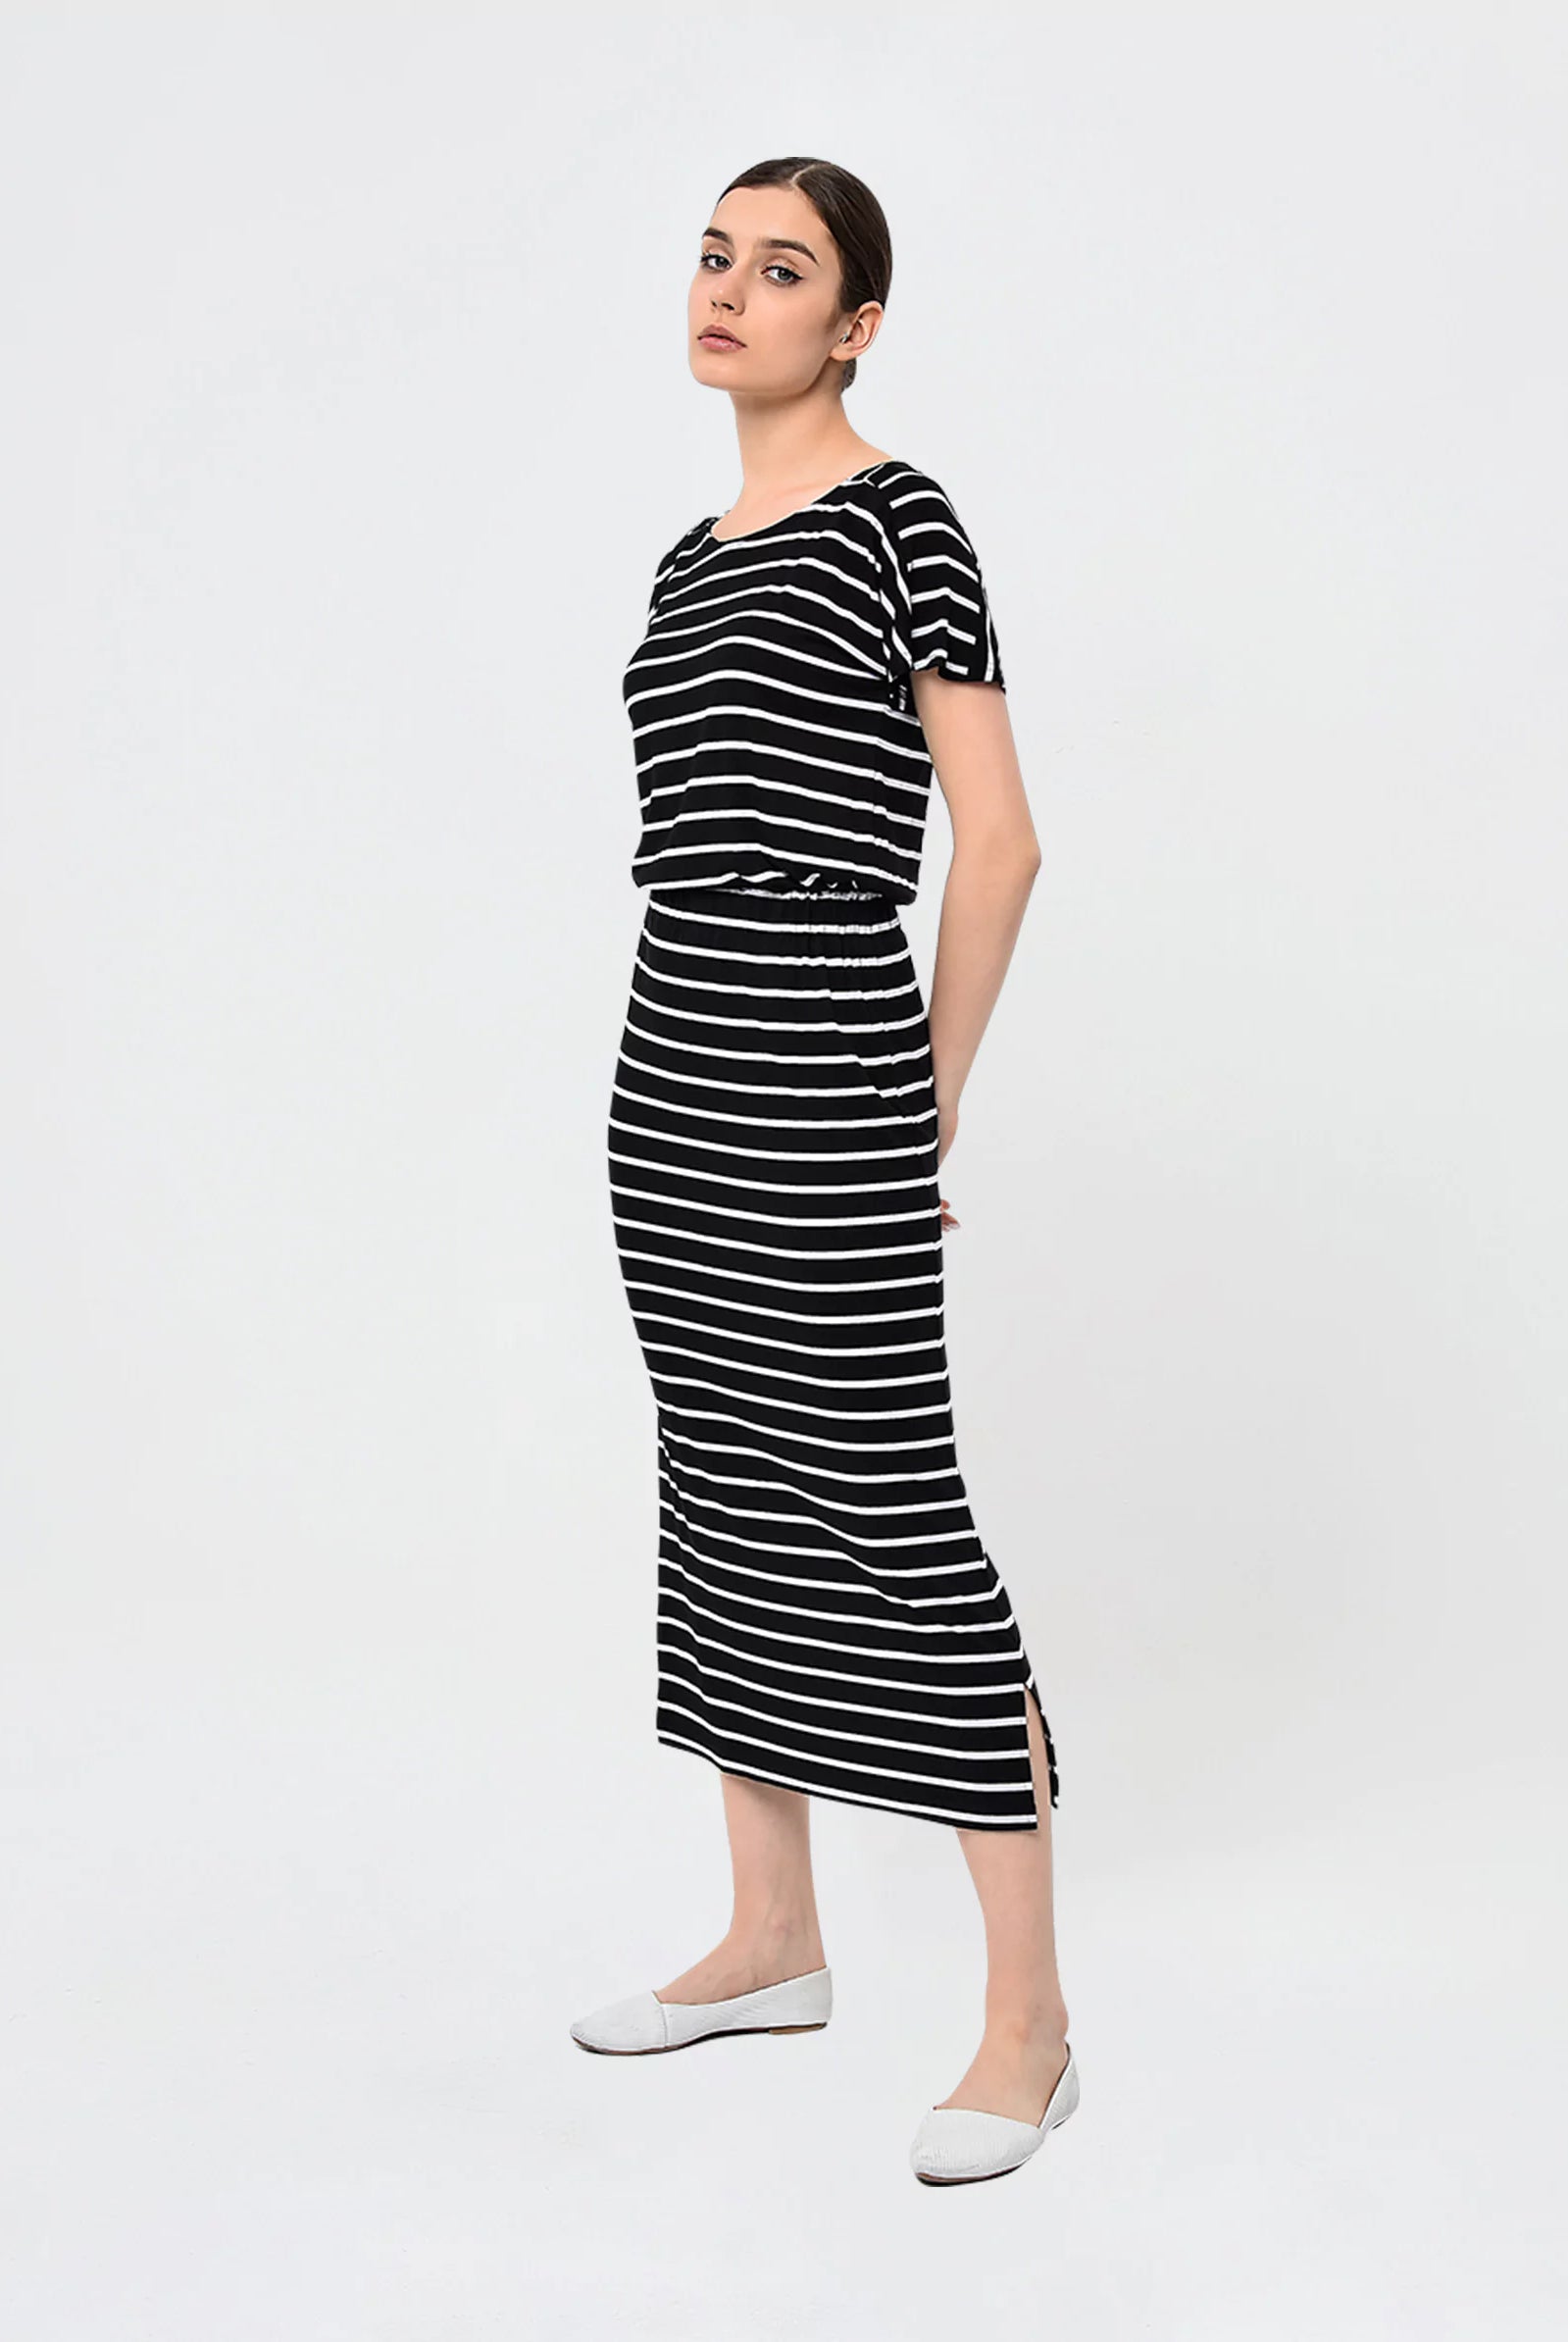 Black and White Striped Dresses